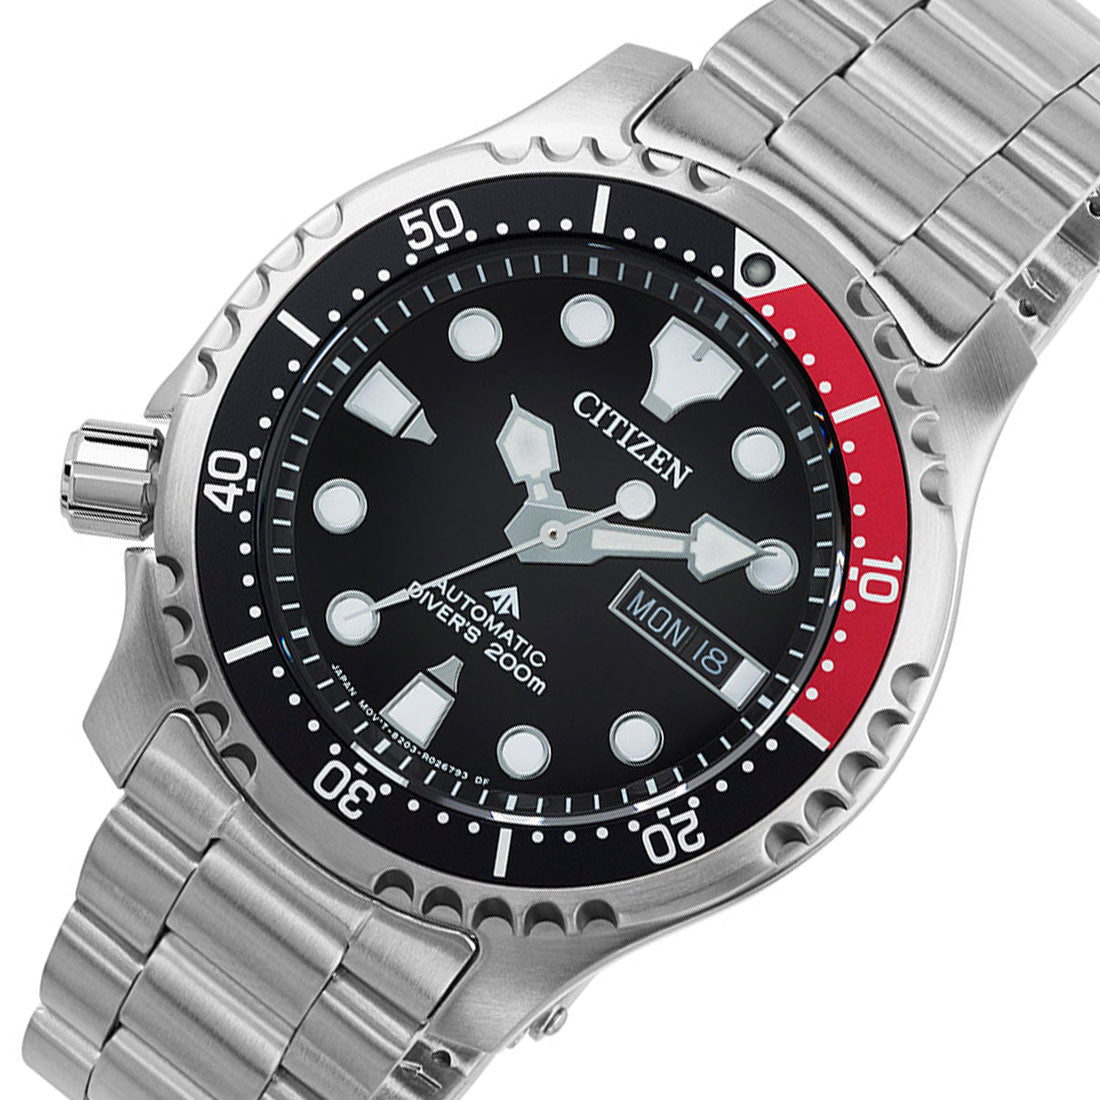 Citizen Promaster NY0085-86E Black Dial Automatic Diving Watch -Citizen